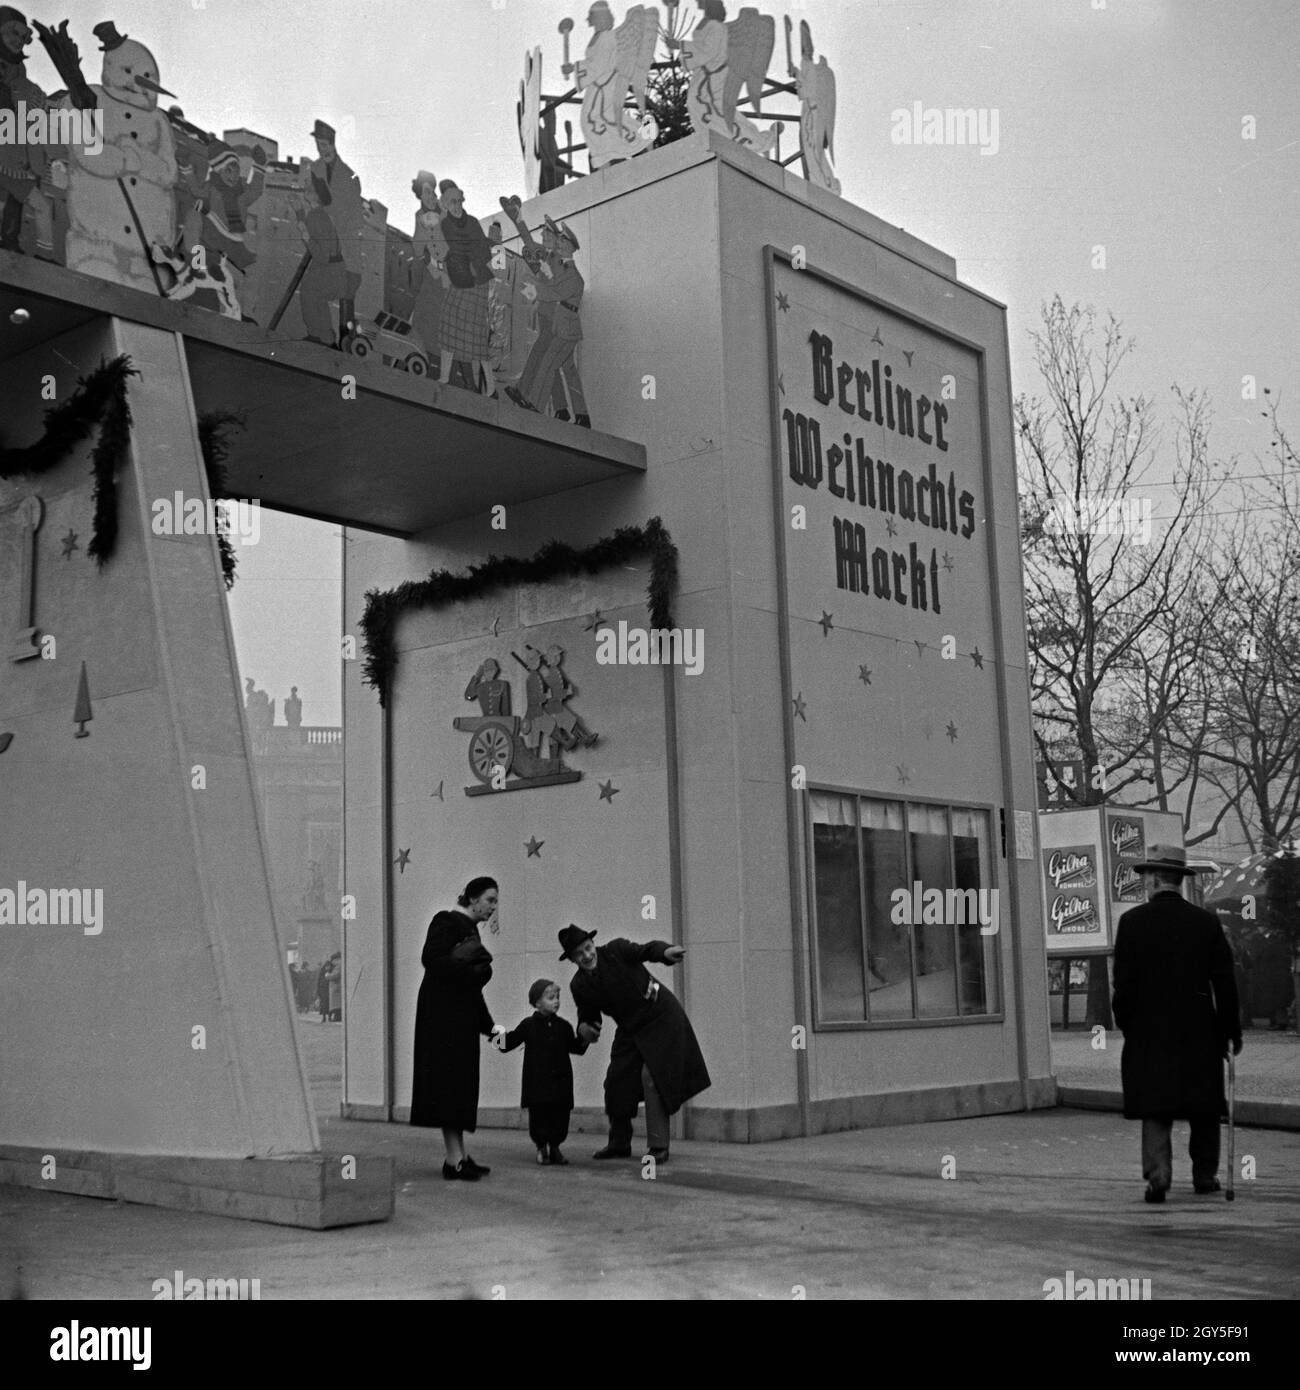 Ein kleiner Junge mit seinen Eltern am Eingang zum Berliner Weihnachtsmarkt Deutschland, 1930er Jahre. Un petit garçon avec ses parents à l'entrée du marché de noël de Berlin, Allemagne 1930. Banque D'Images